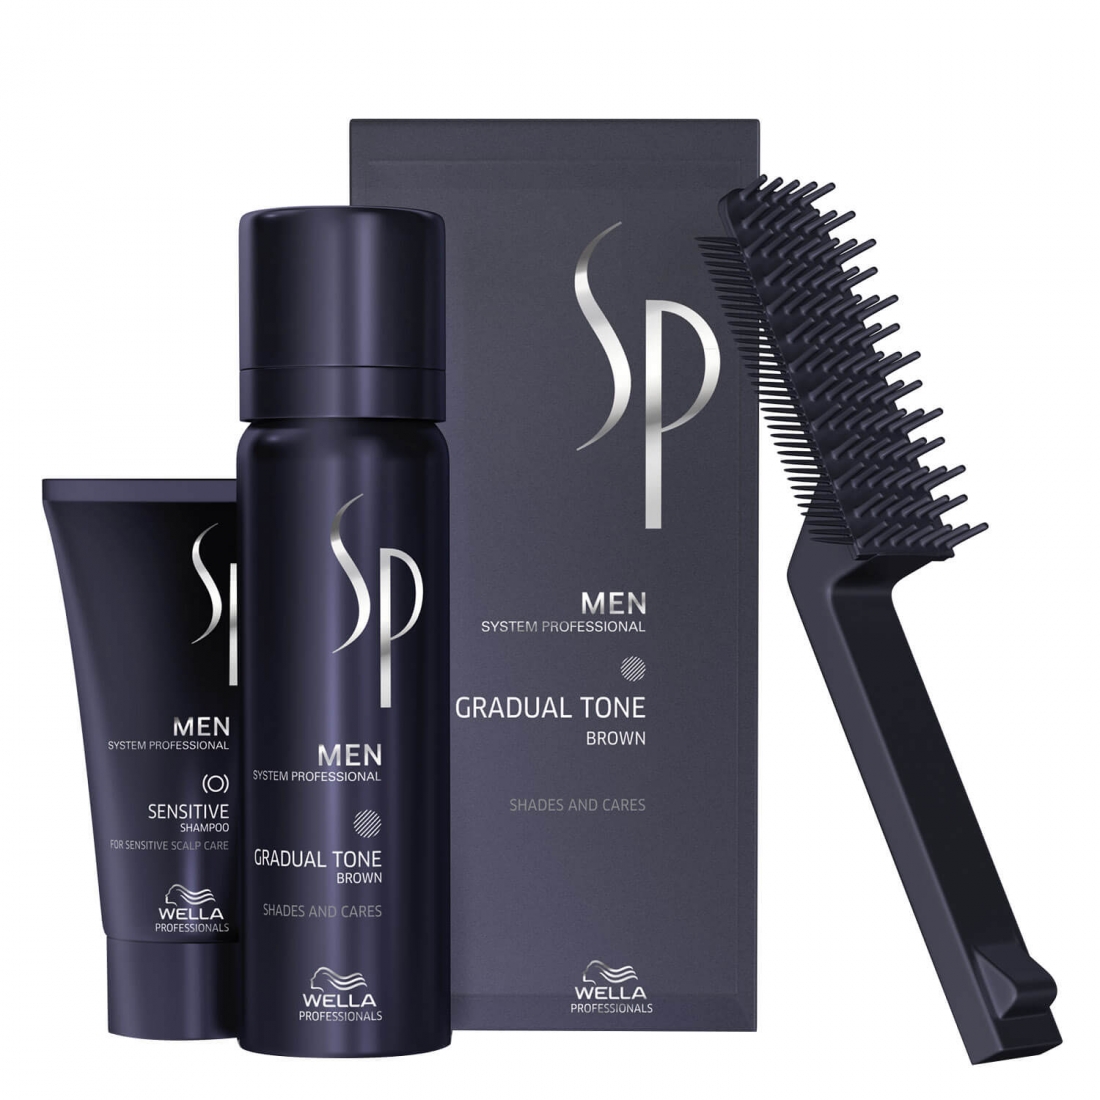 'SP Men Gradual Tone Brown' Hair Care Set - 3 Pieces